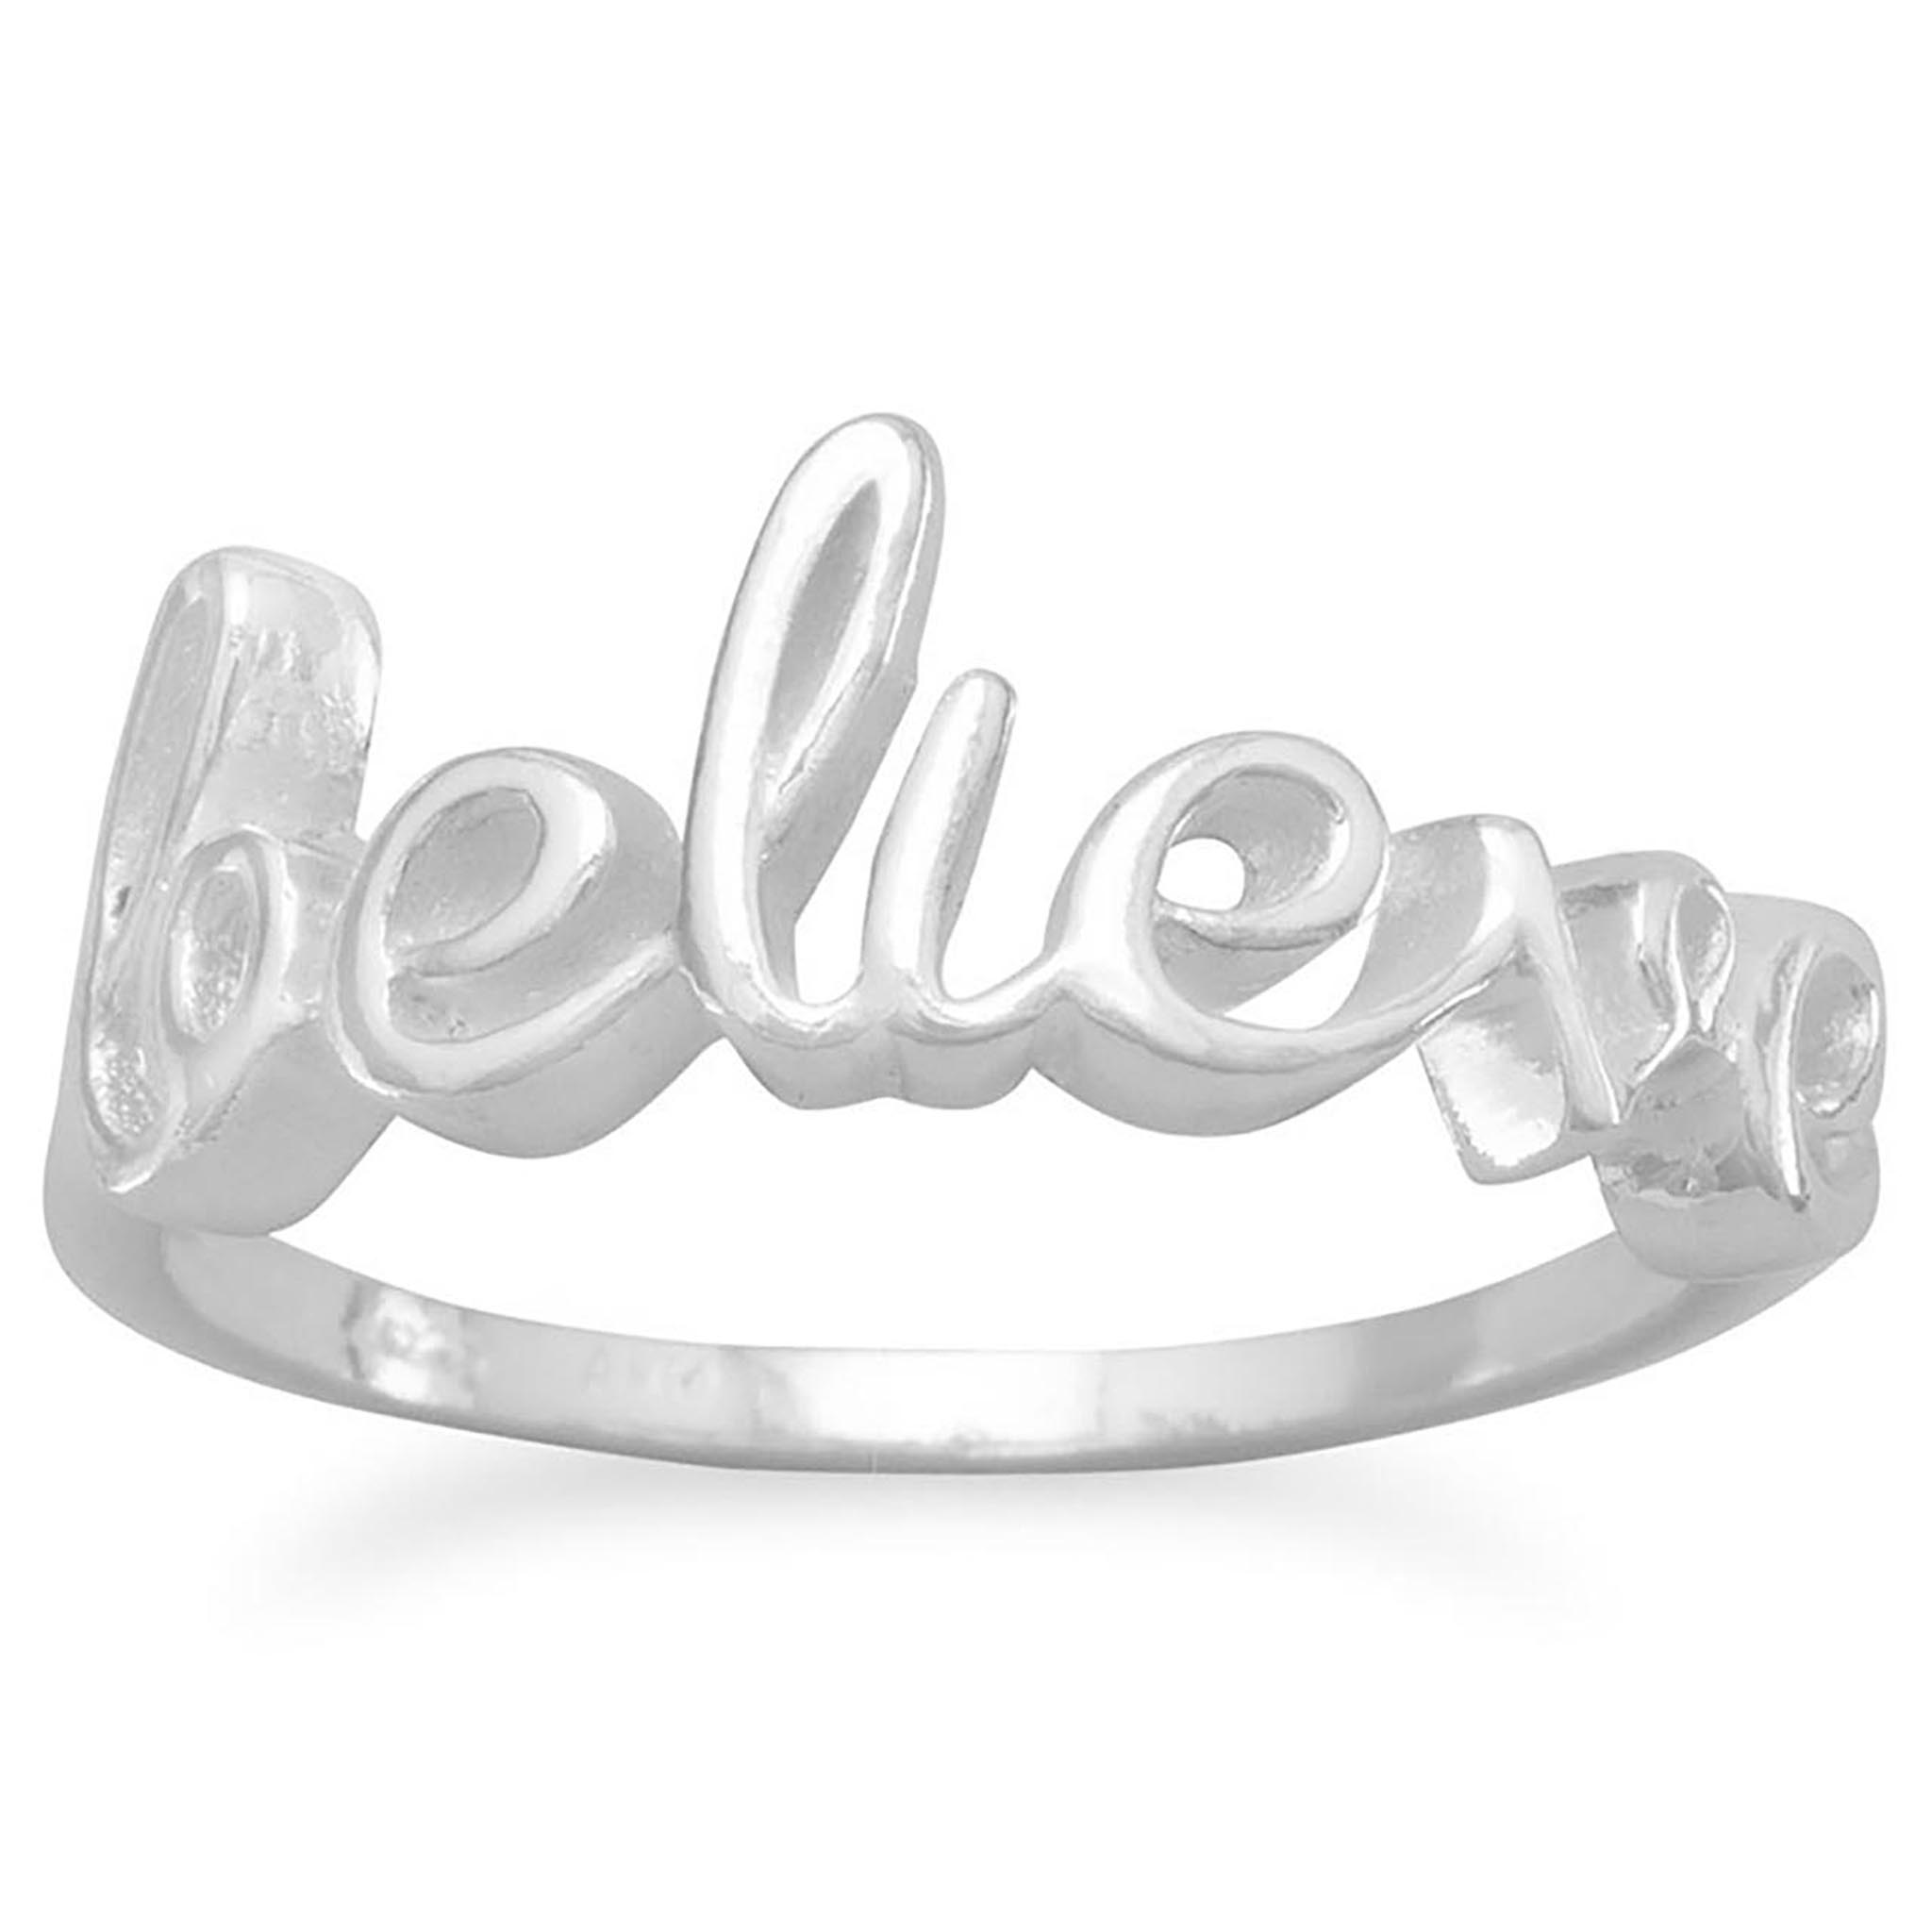 Polished Believe Script Ring